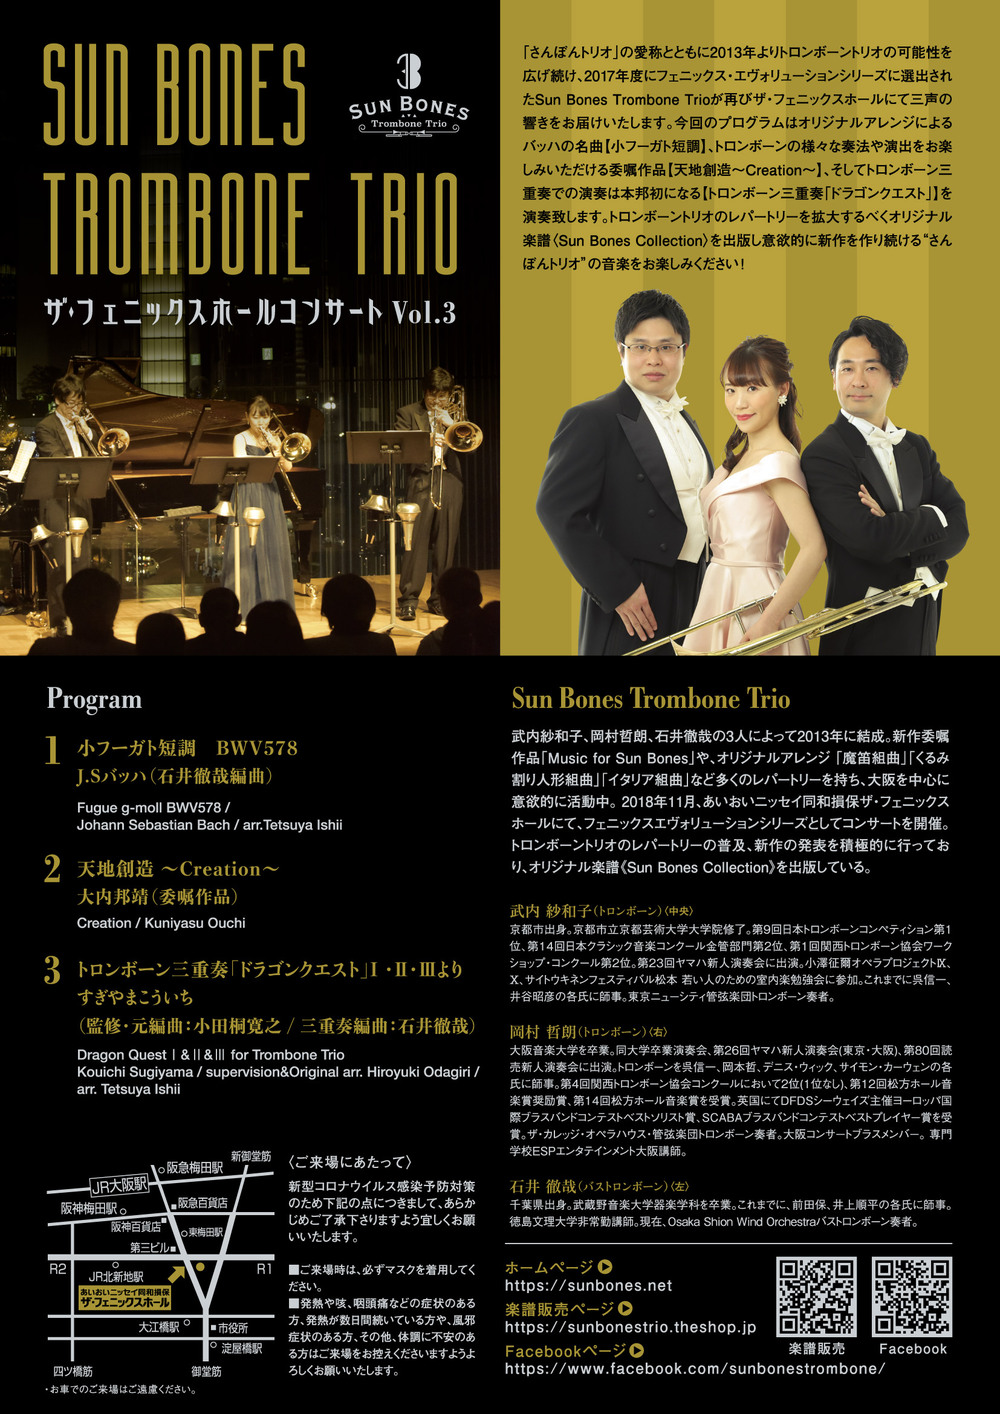 Sun Bones Trombone Trio ザ・フェニックスホールコンサートVol.3【Sun Bones Trombone Trio 】 |  あいおいニッセイ同和損保ザ・フェニックスホール